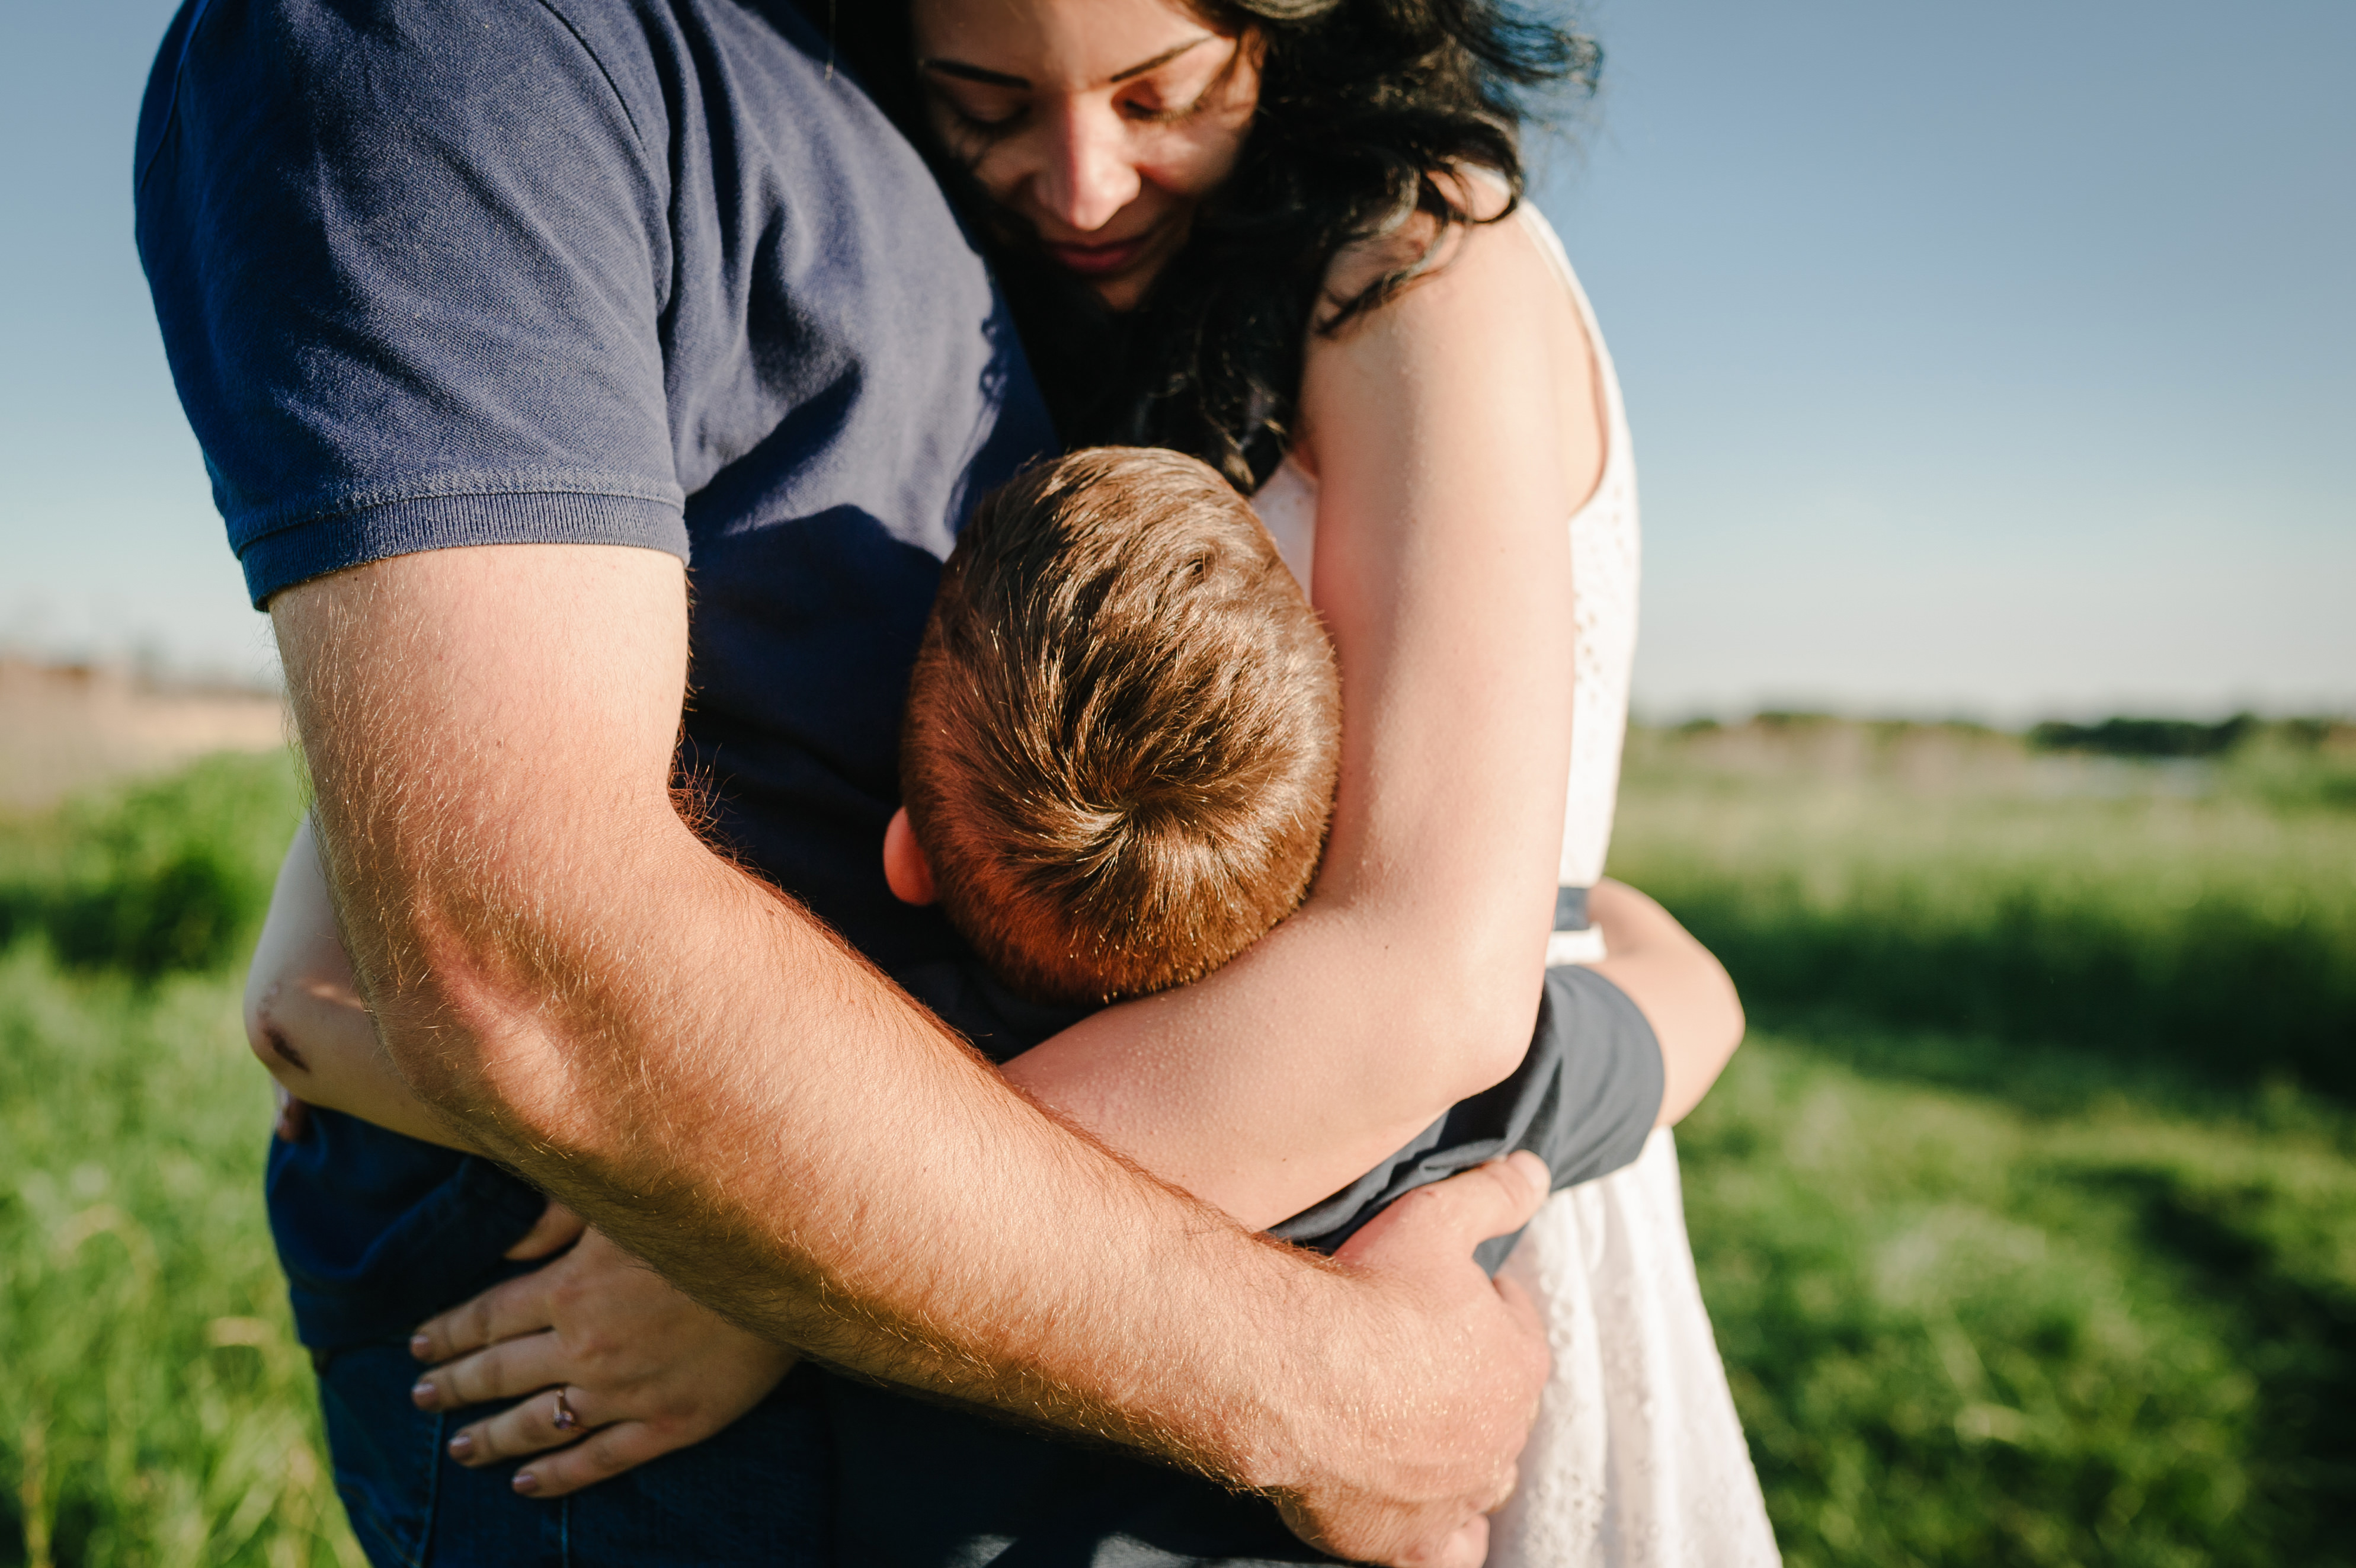 Boy hugs his parents | Source: Shutterstock.com